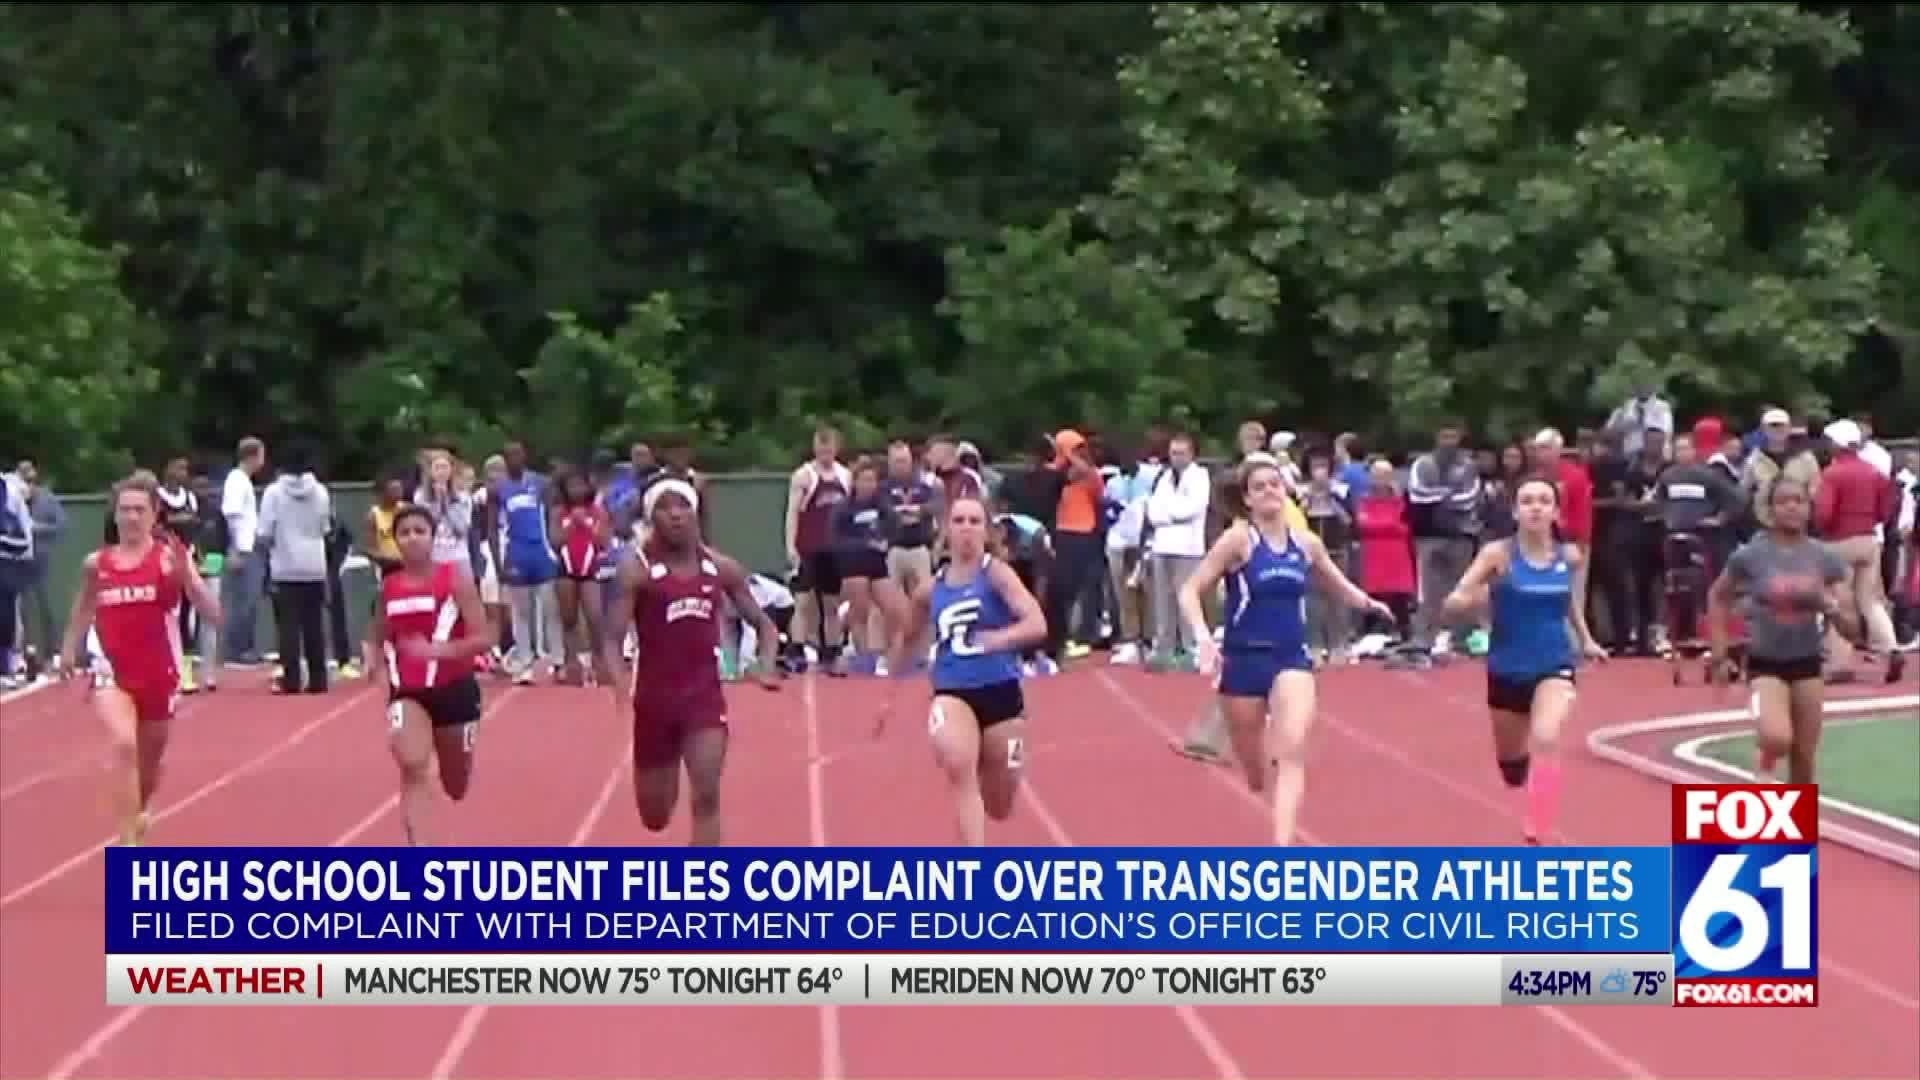 Lawsuits against transgender athletes